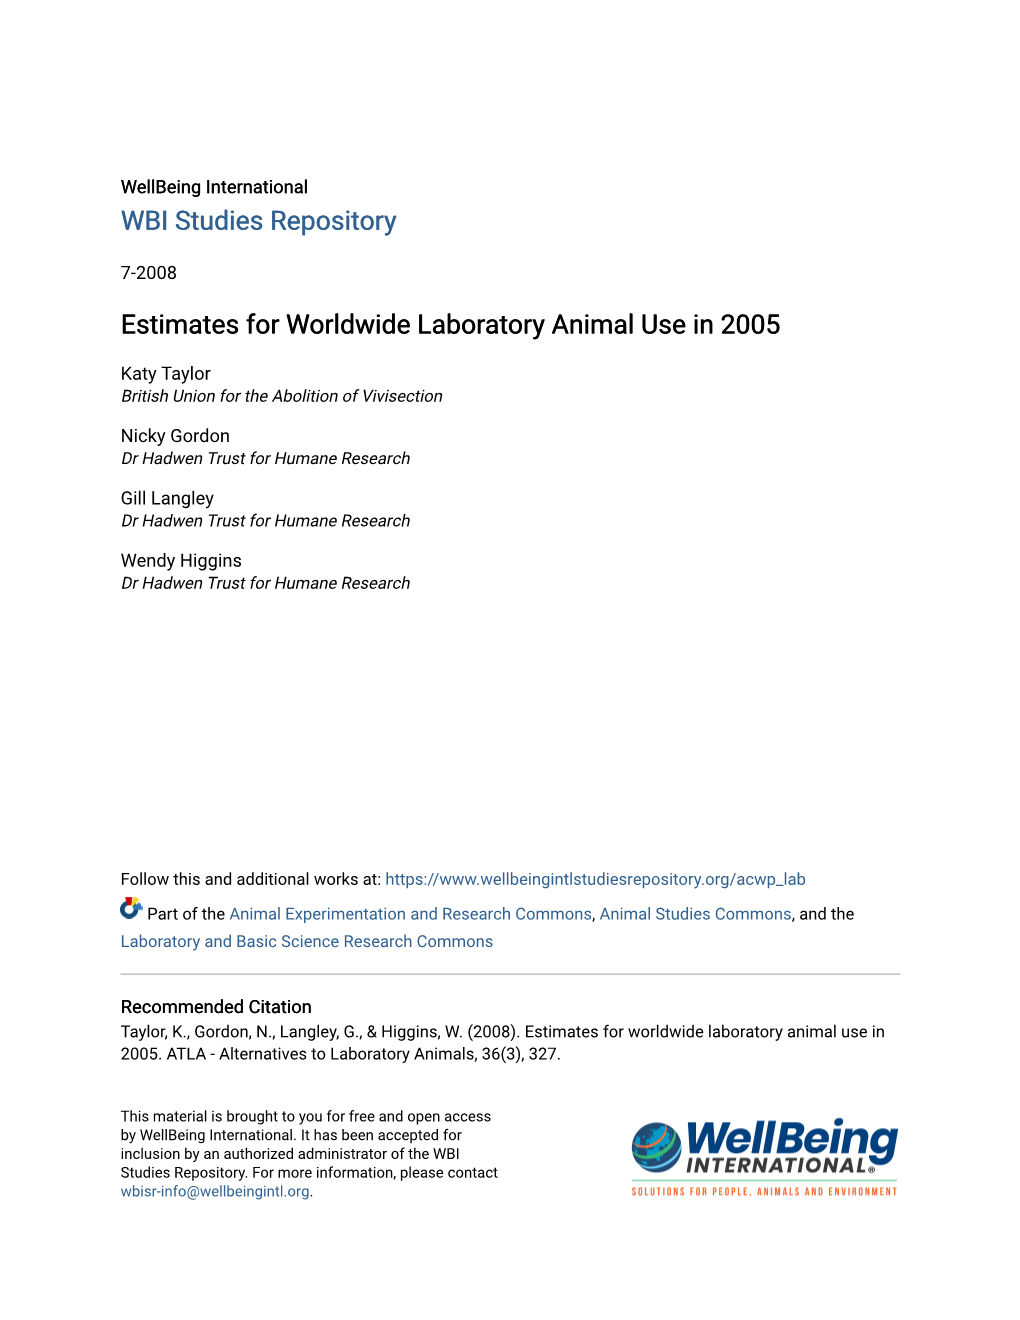 Estimates for Worldwide Laboratory Animal Use in 2005